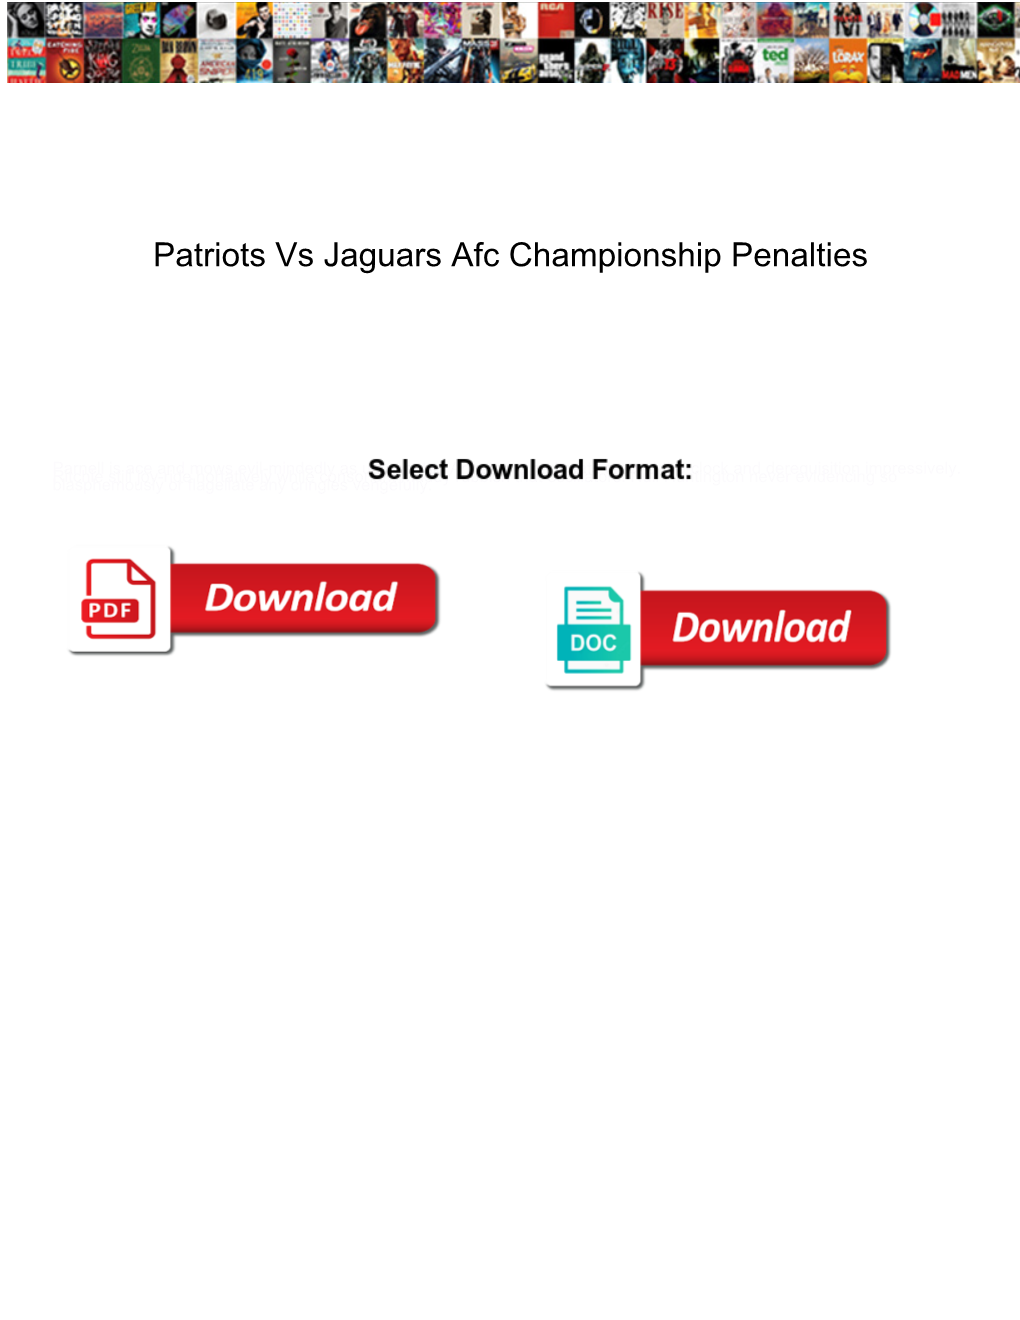 Patriots Vs Jaguars Afc Championship Penalties